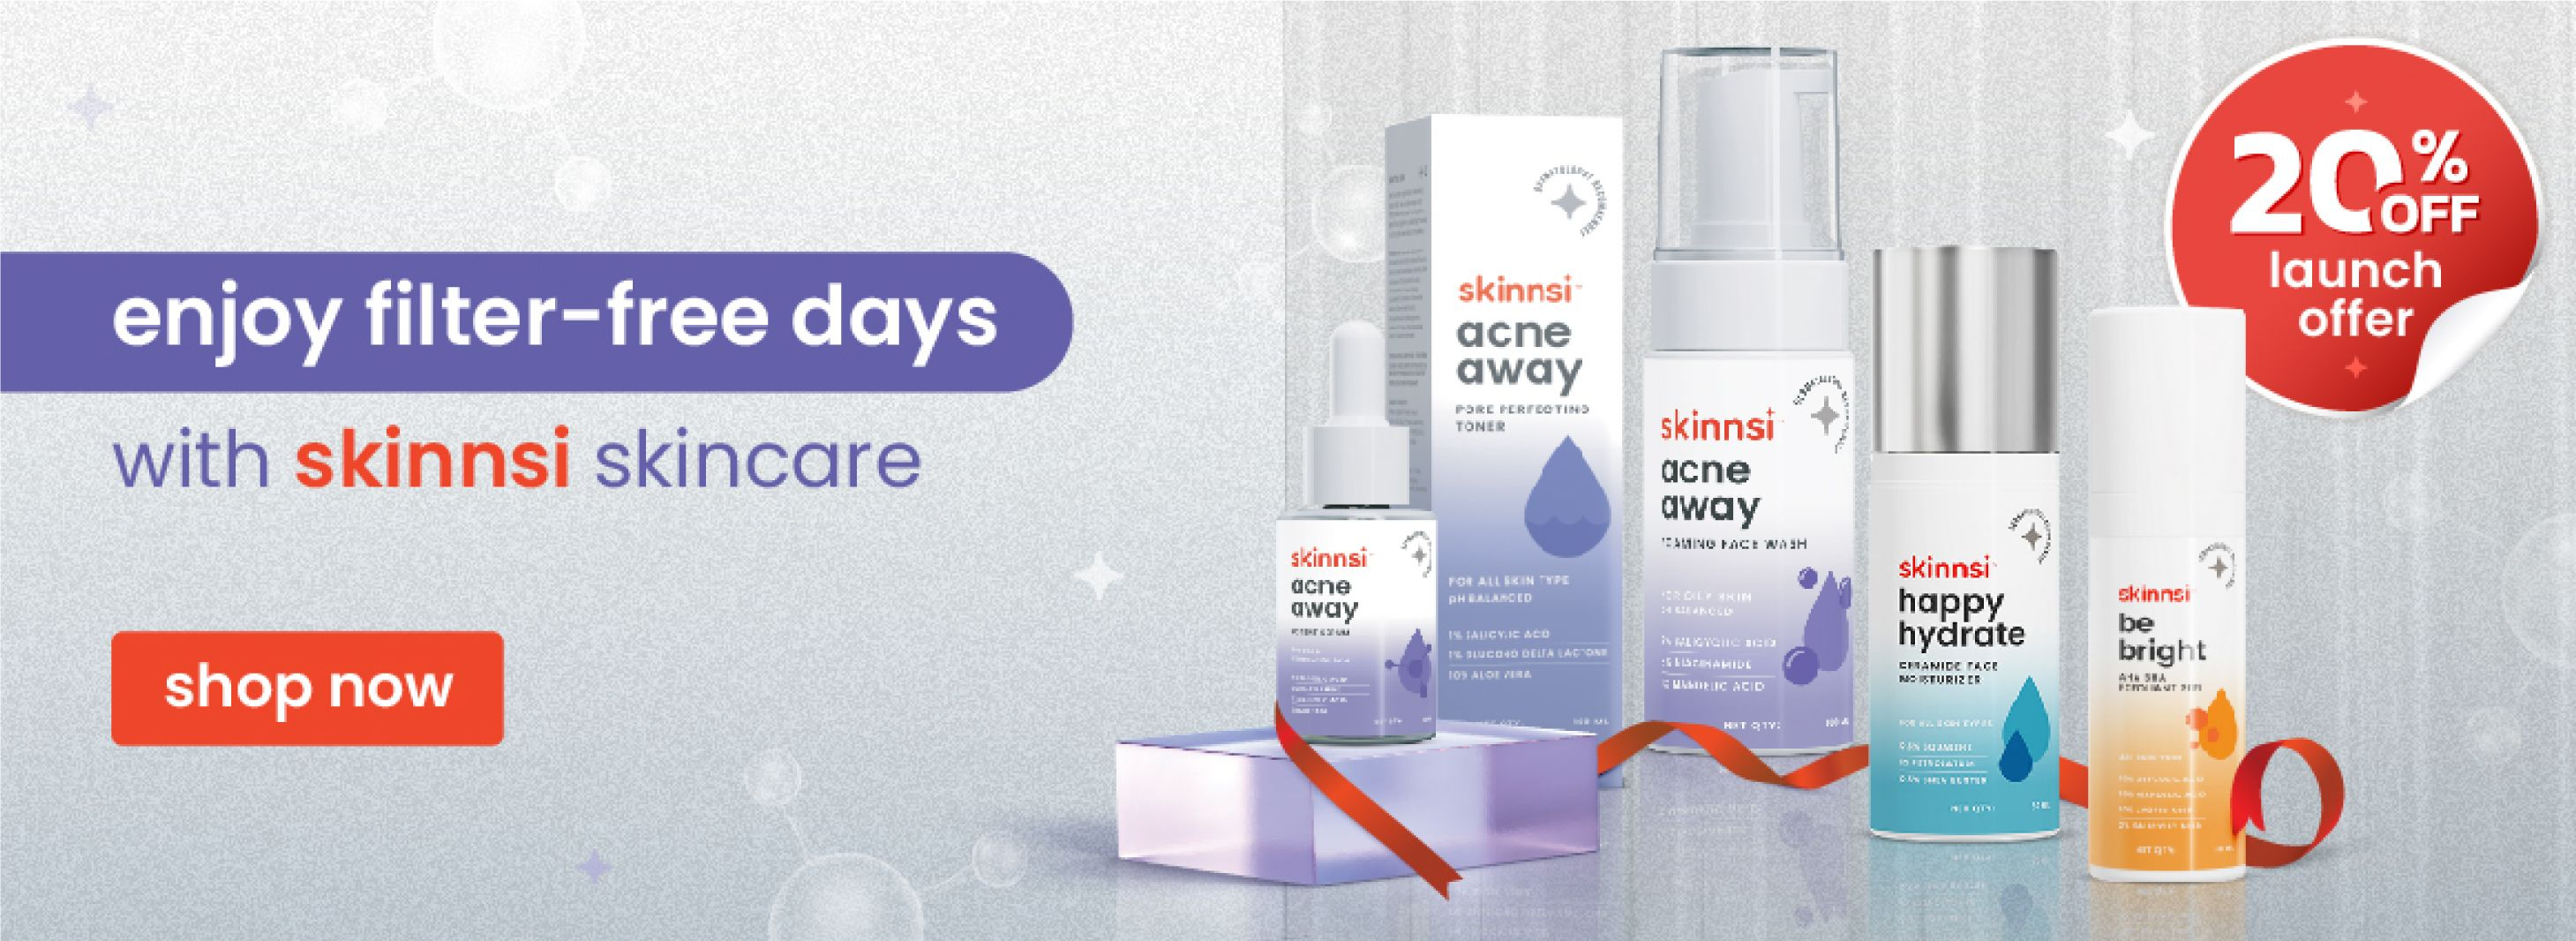 acne away foaming facewash launch offer